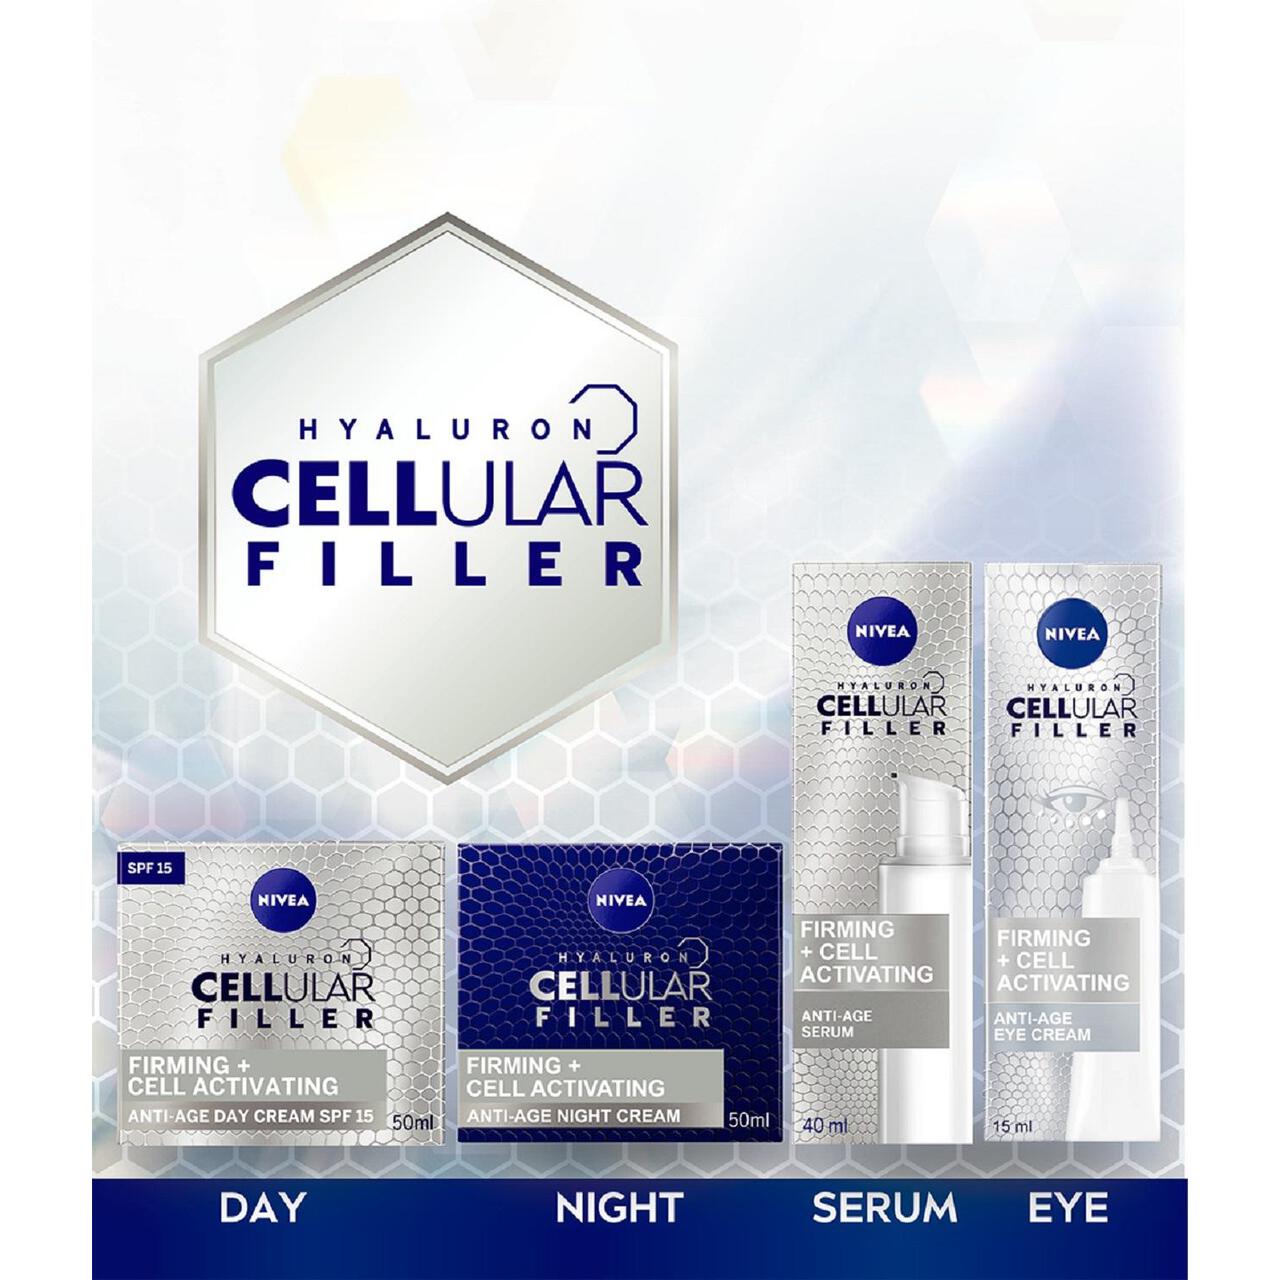 NIVEA Hyularon Cellular Filler Anti-Age Night Cream 50ml